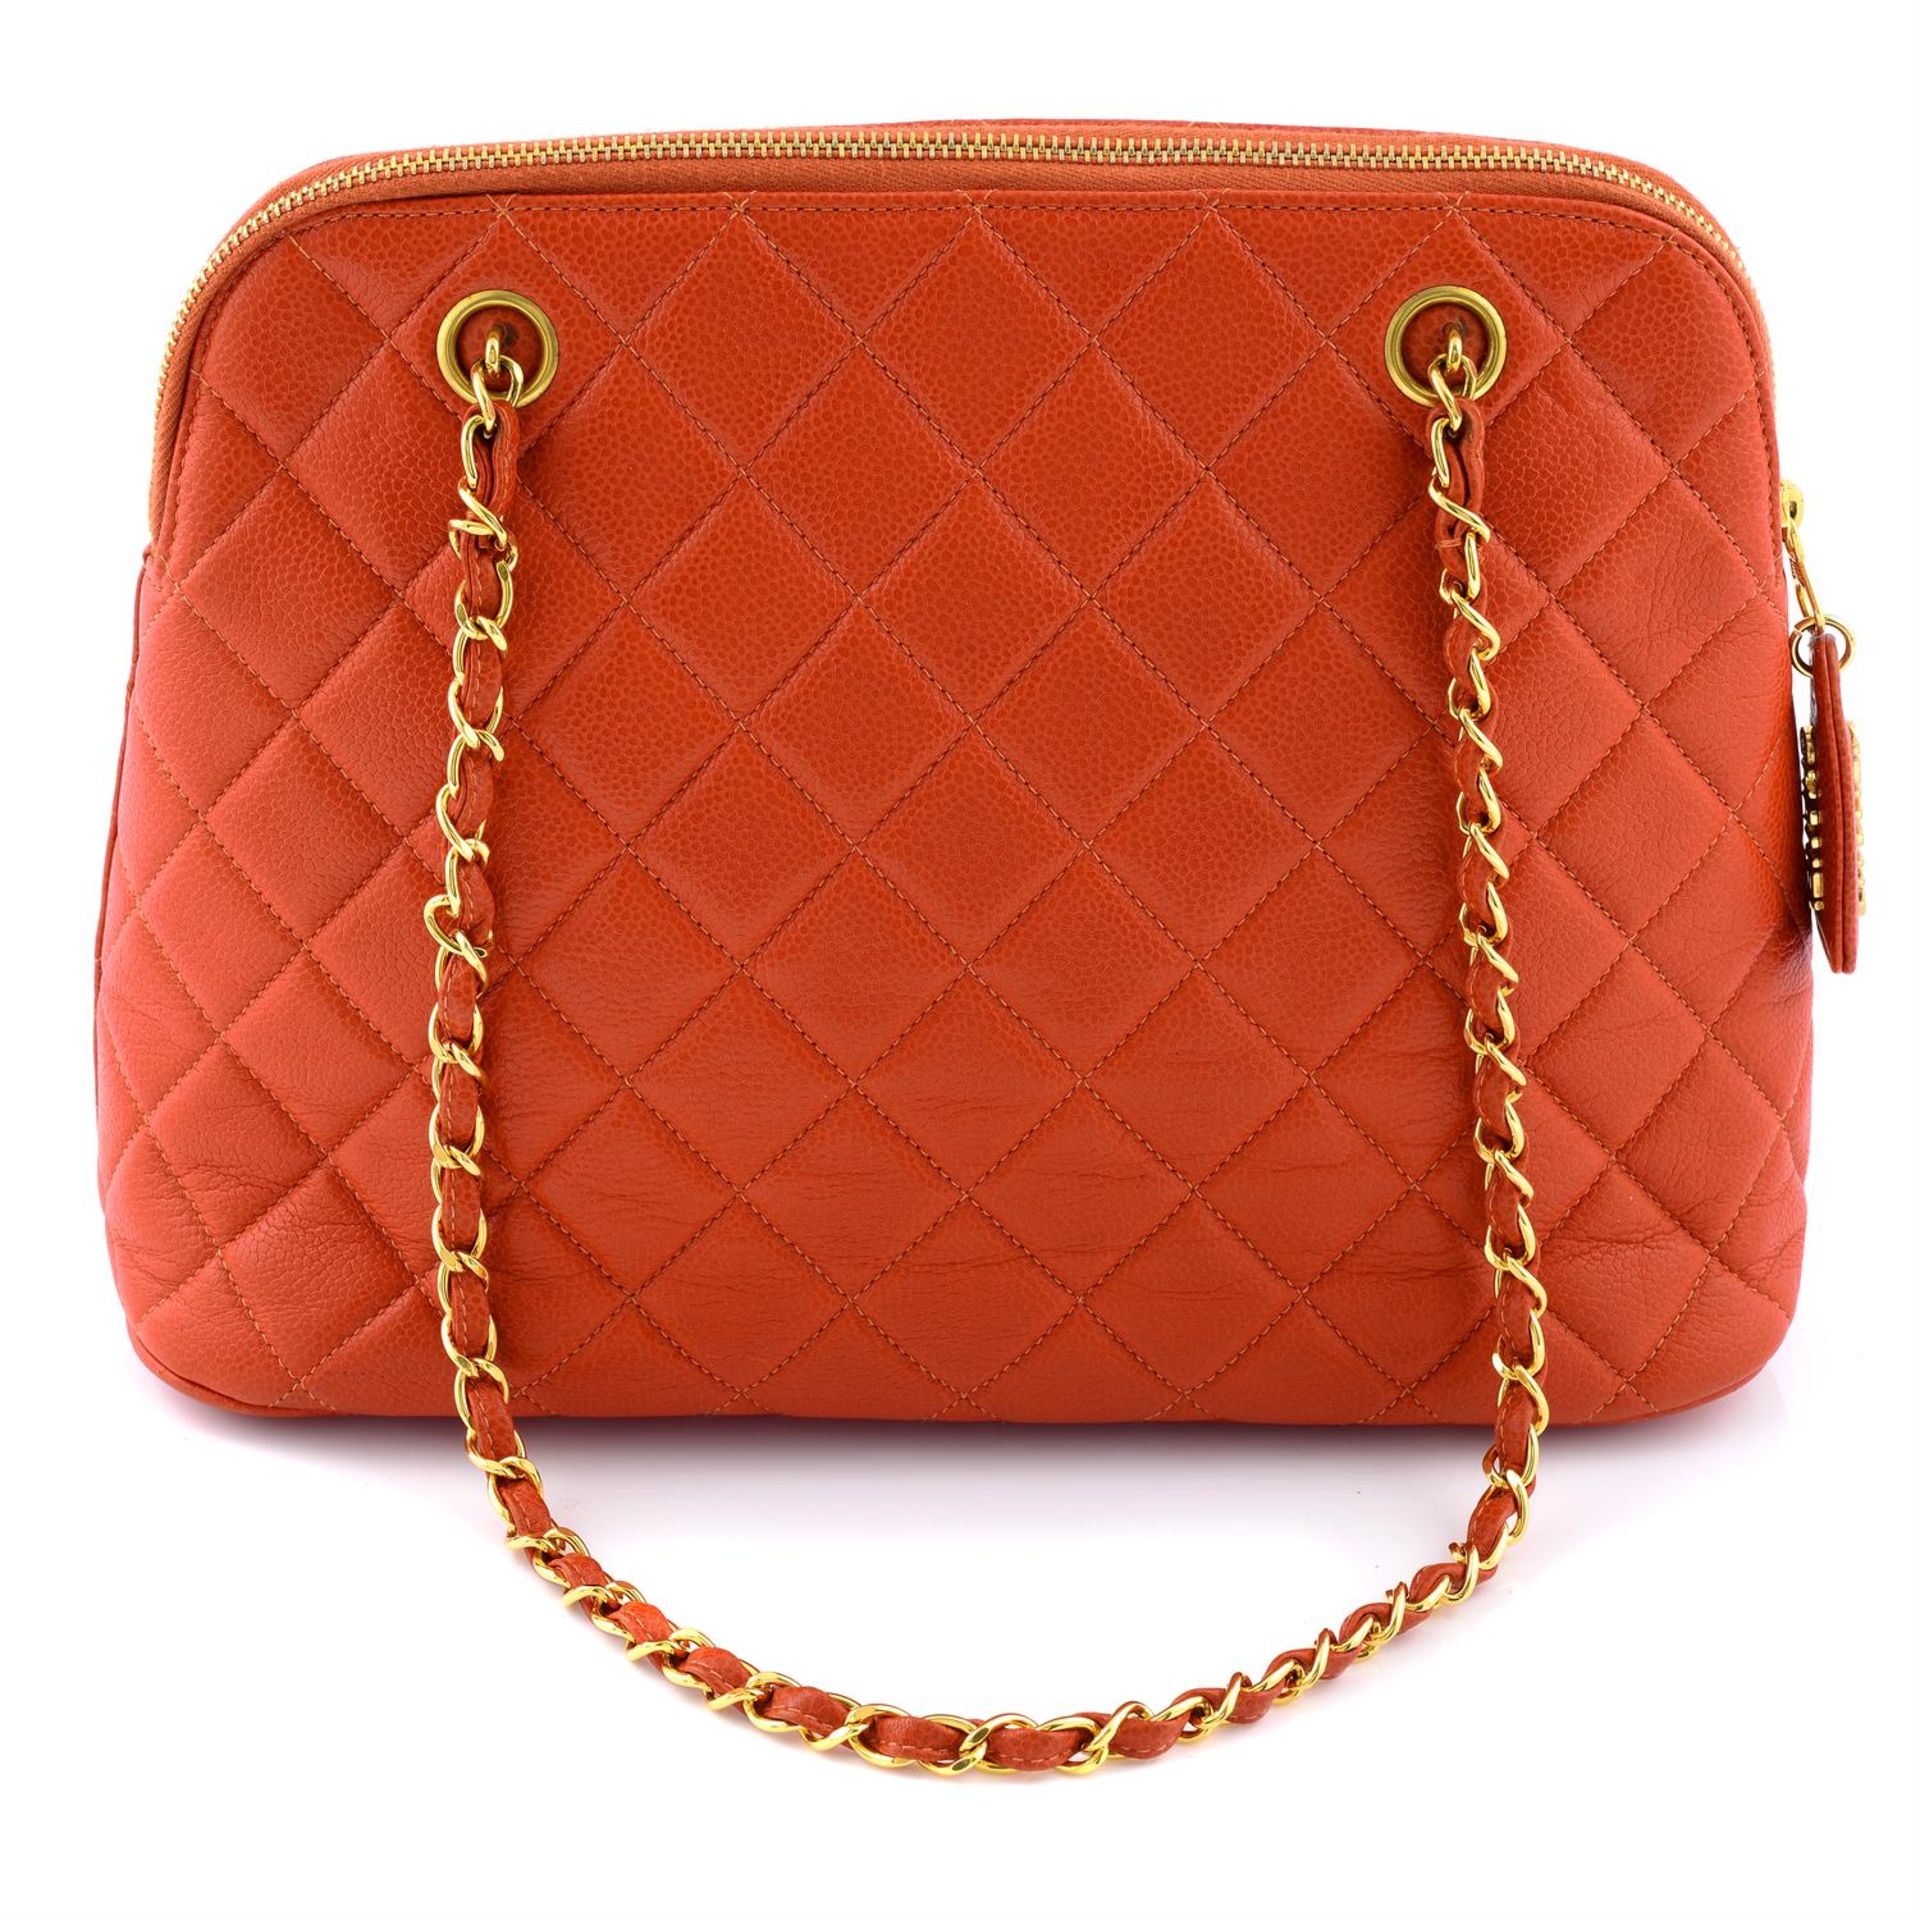 CHANEL - an orange caviar leather handbag. - Image 2 of 5